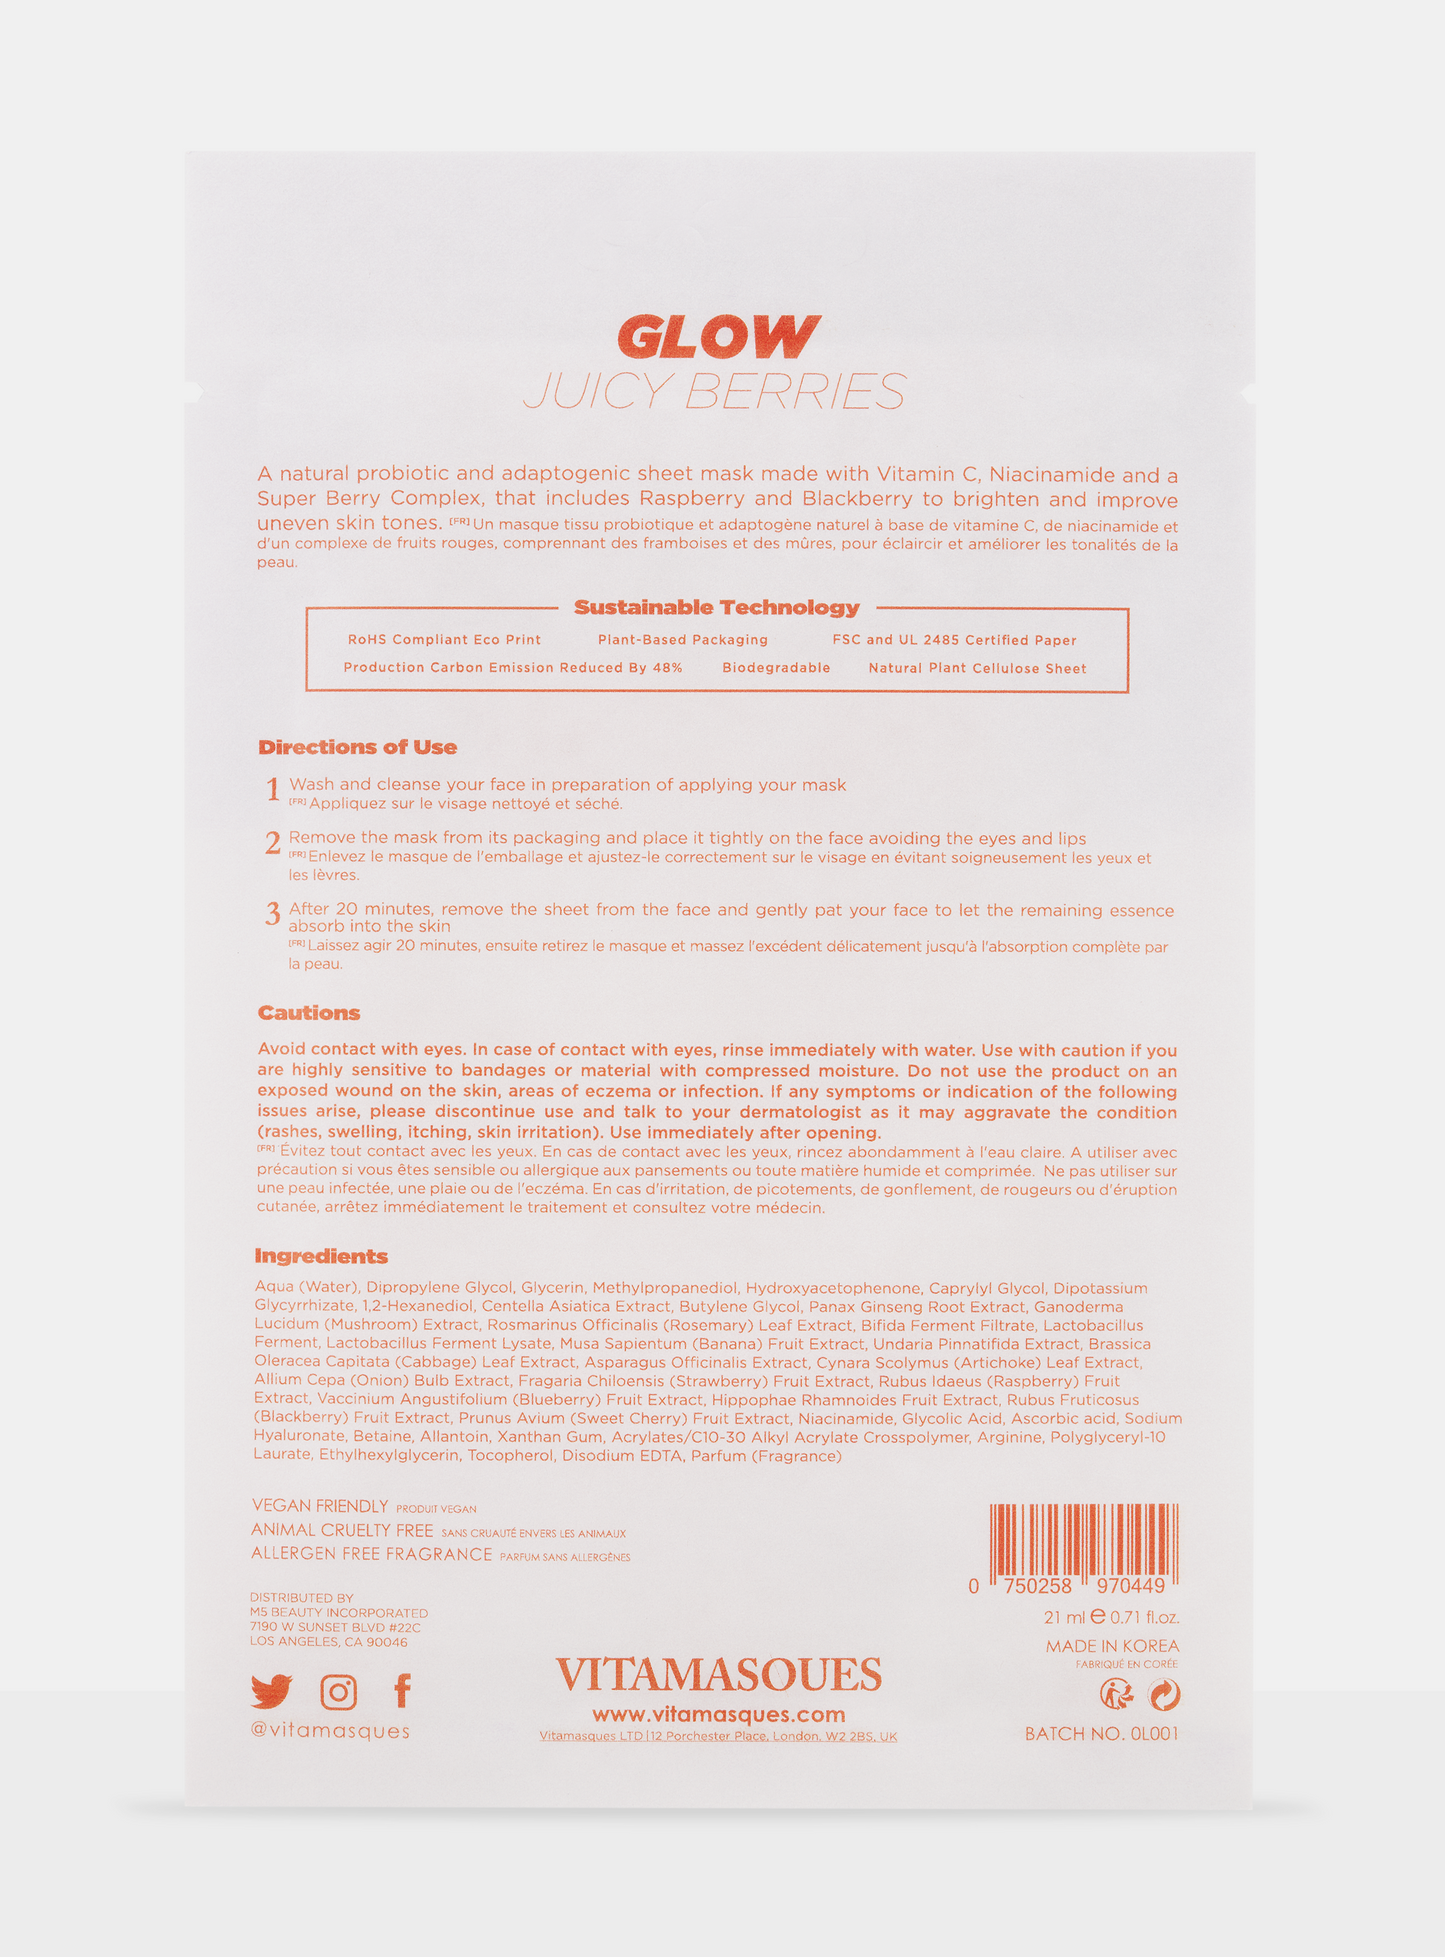 Vitamasques Glow Juicy Berries Biodegradable Sheet Mask